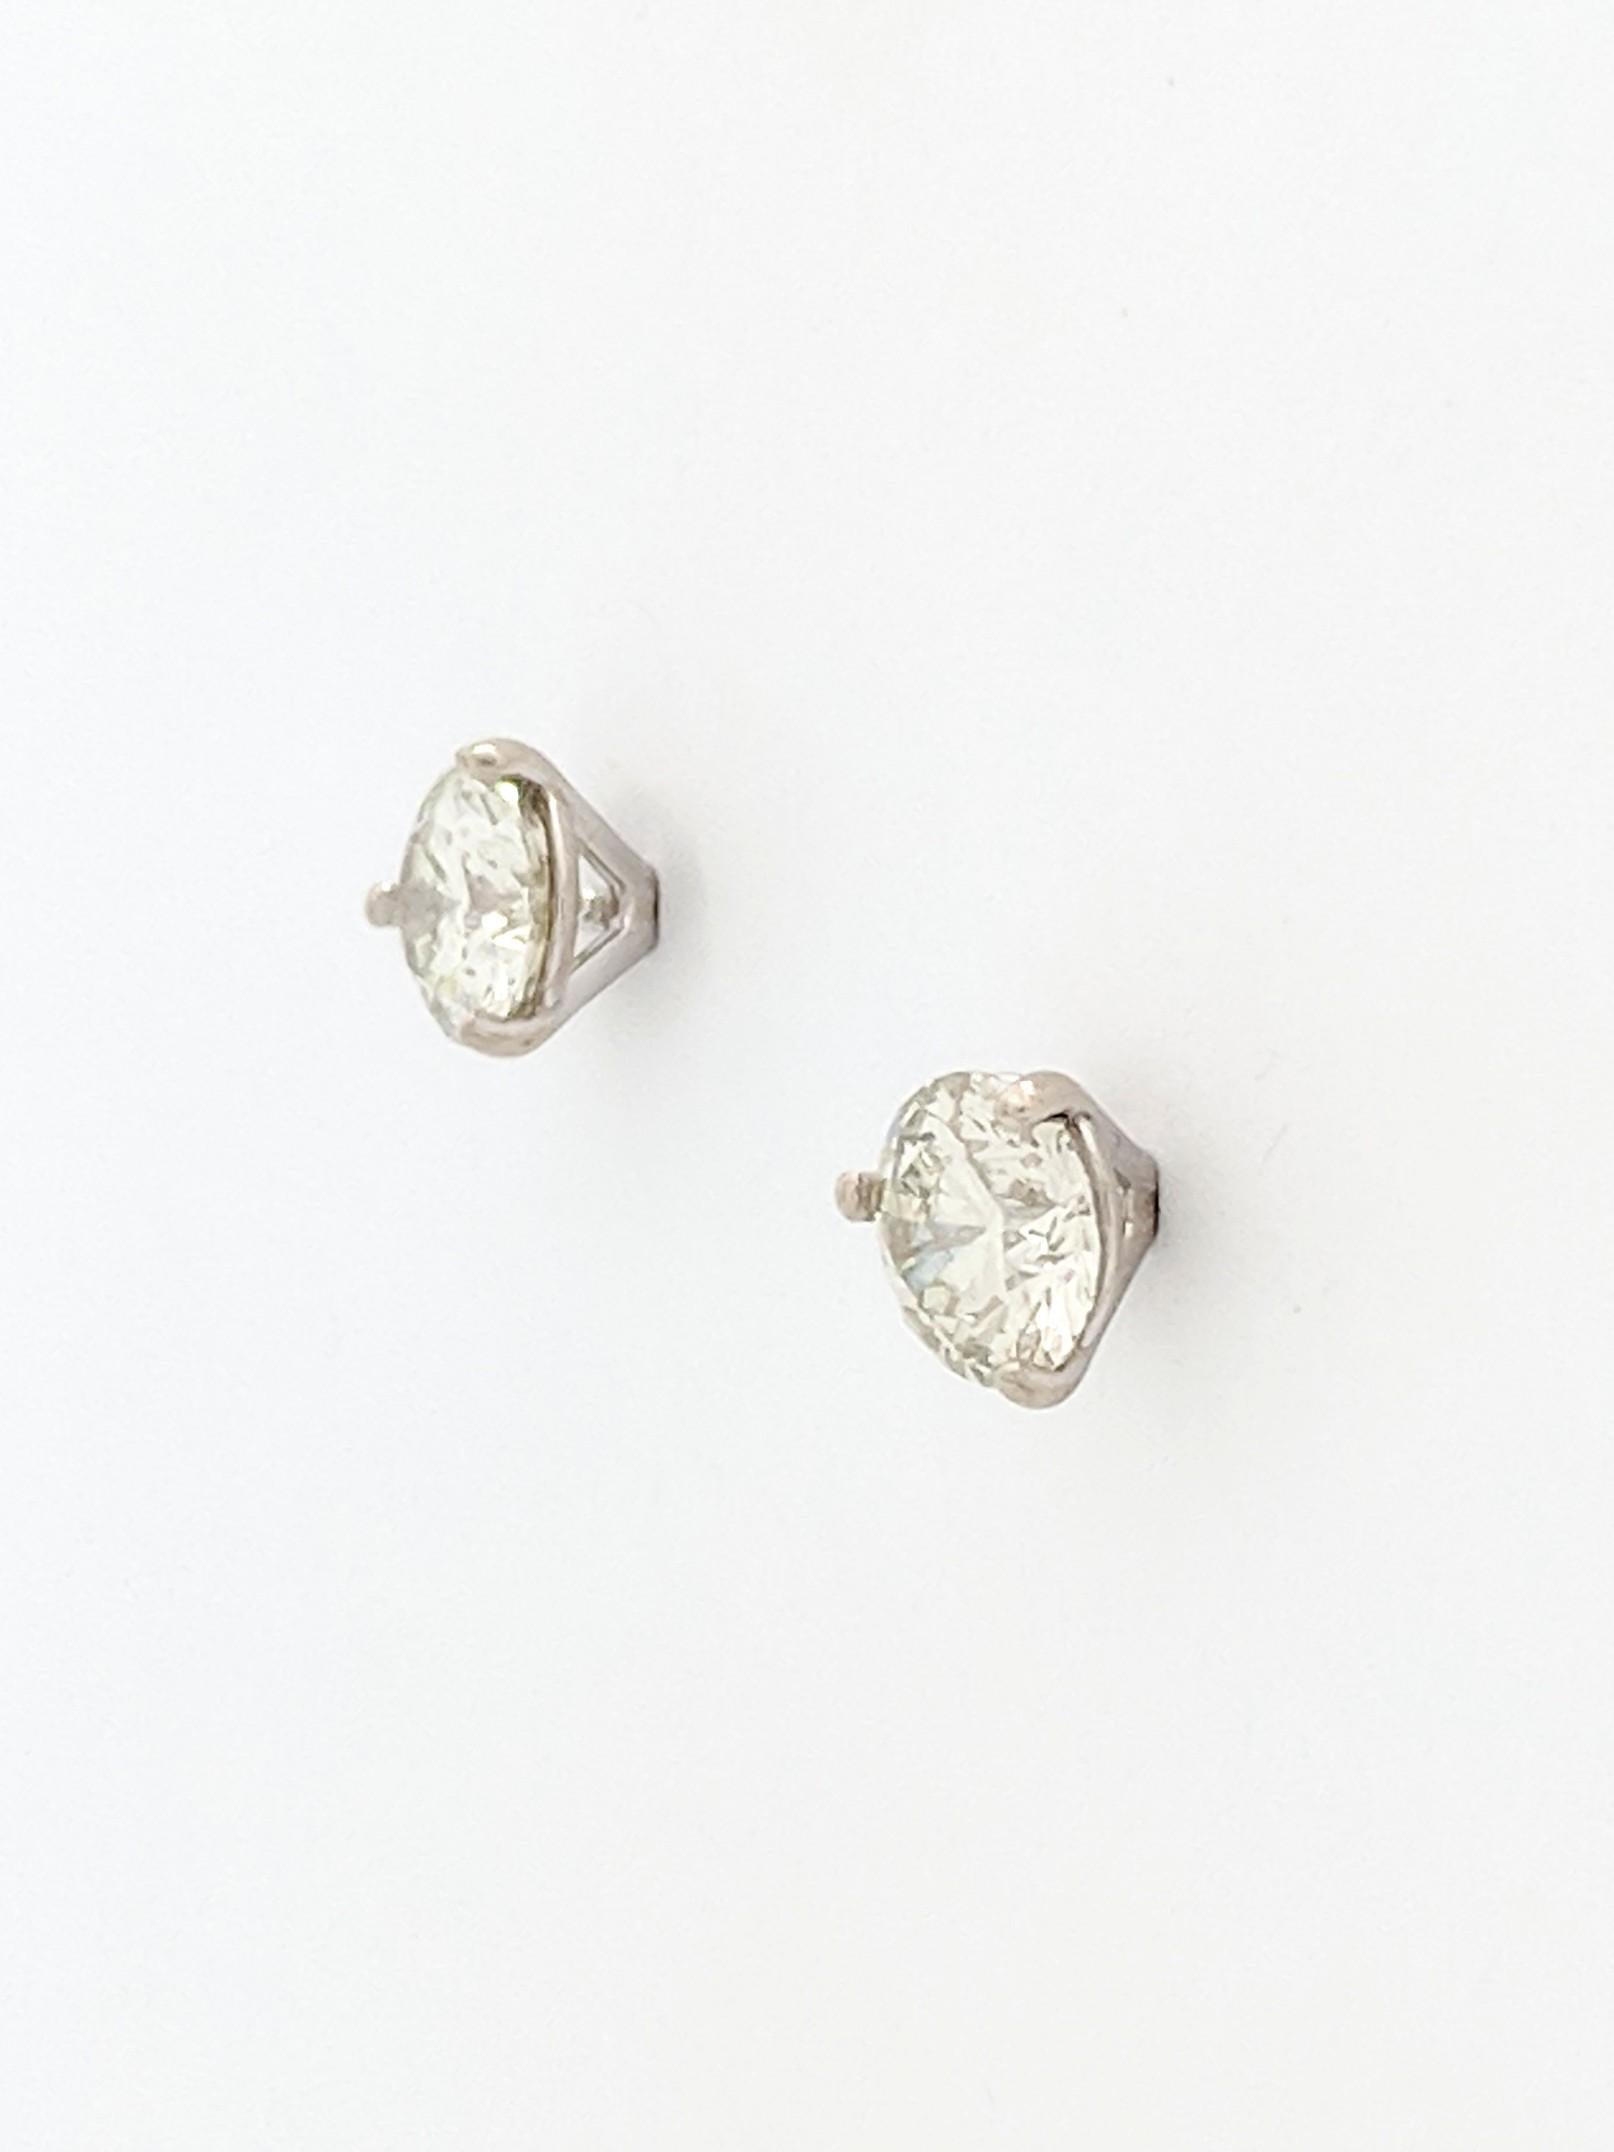 Contemporary 14 Karat White Gold Round Brilliant Cut Diamond Stud Earrings